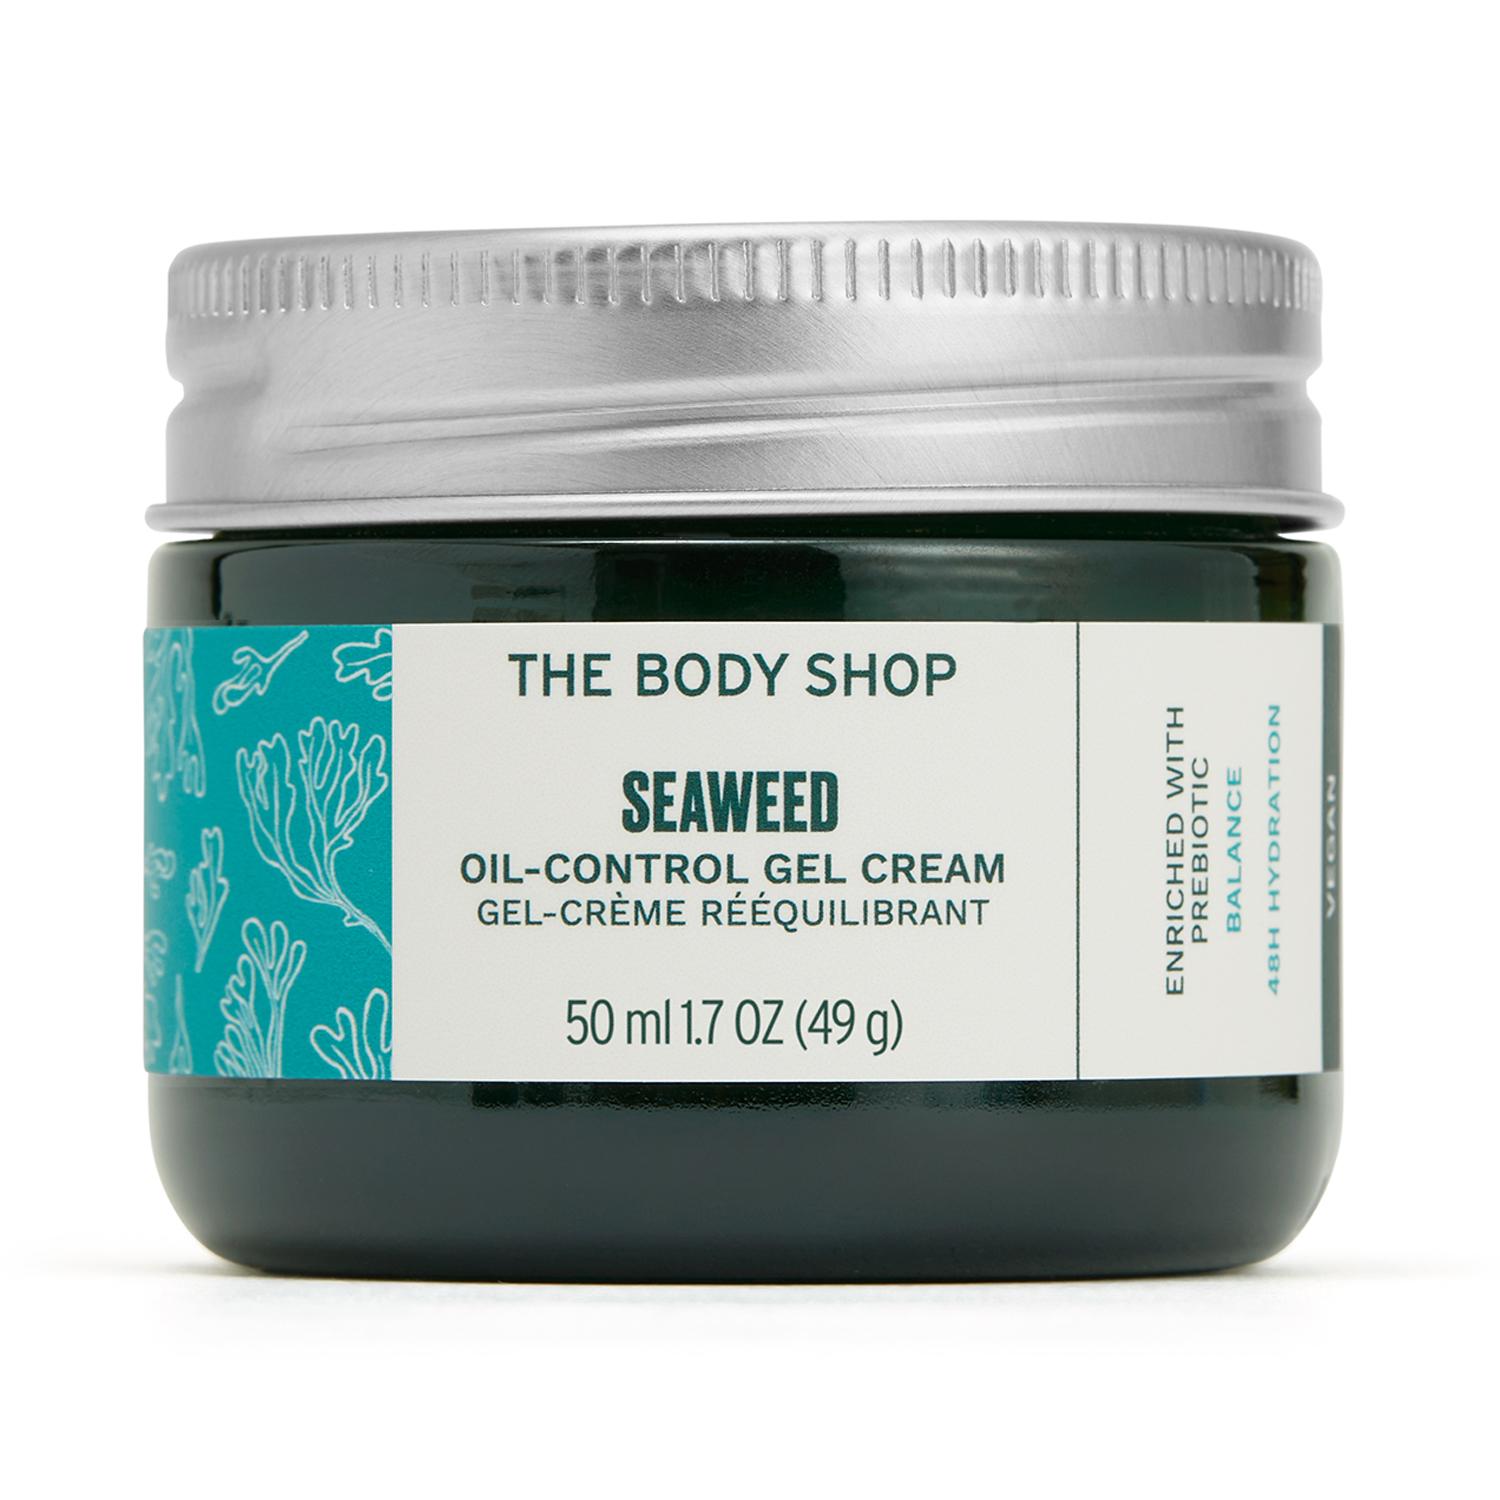 The Body Shop | The Body Shop Seaweed Oil-Control Gel Cream (50ml)